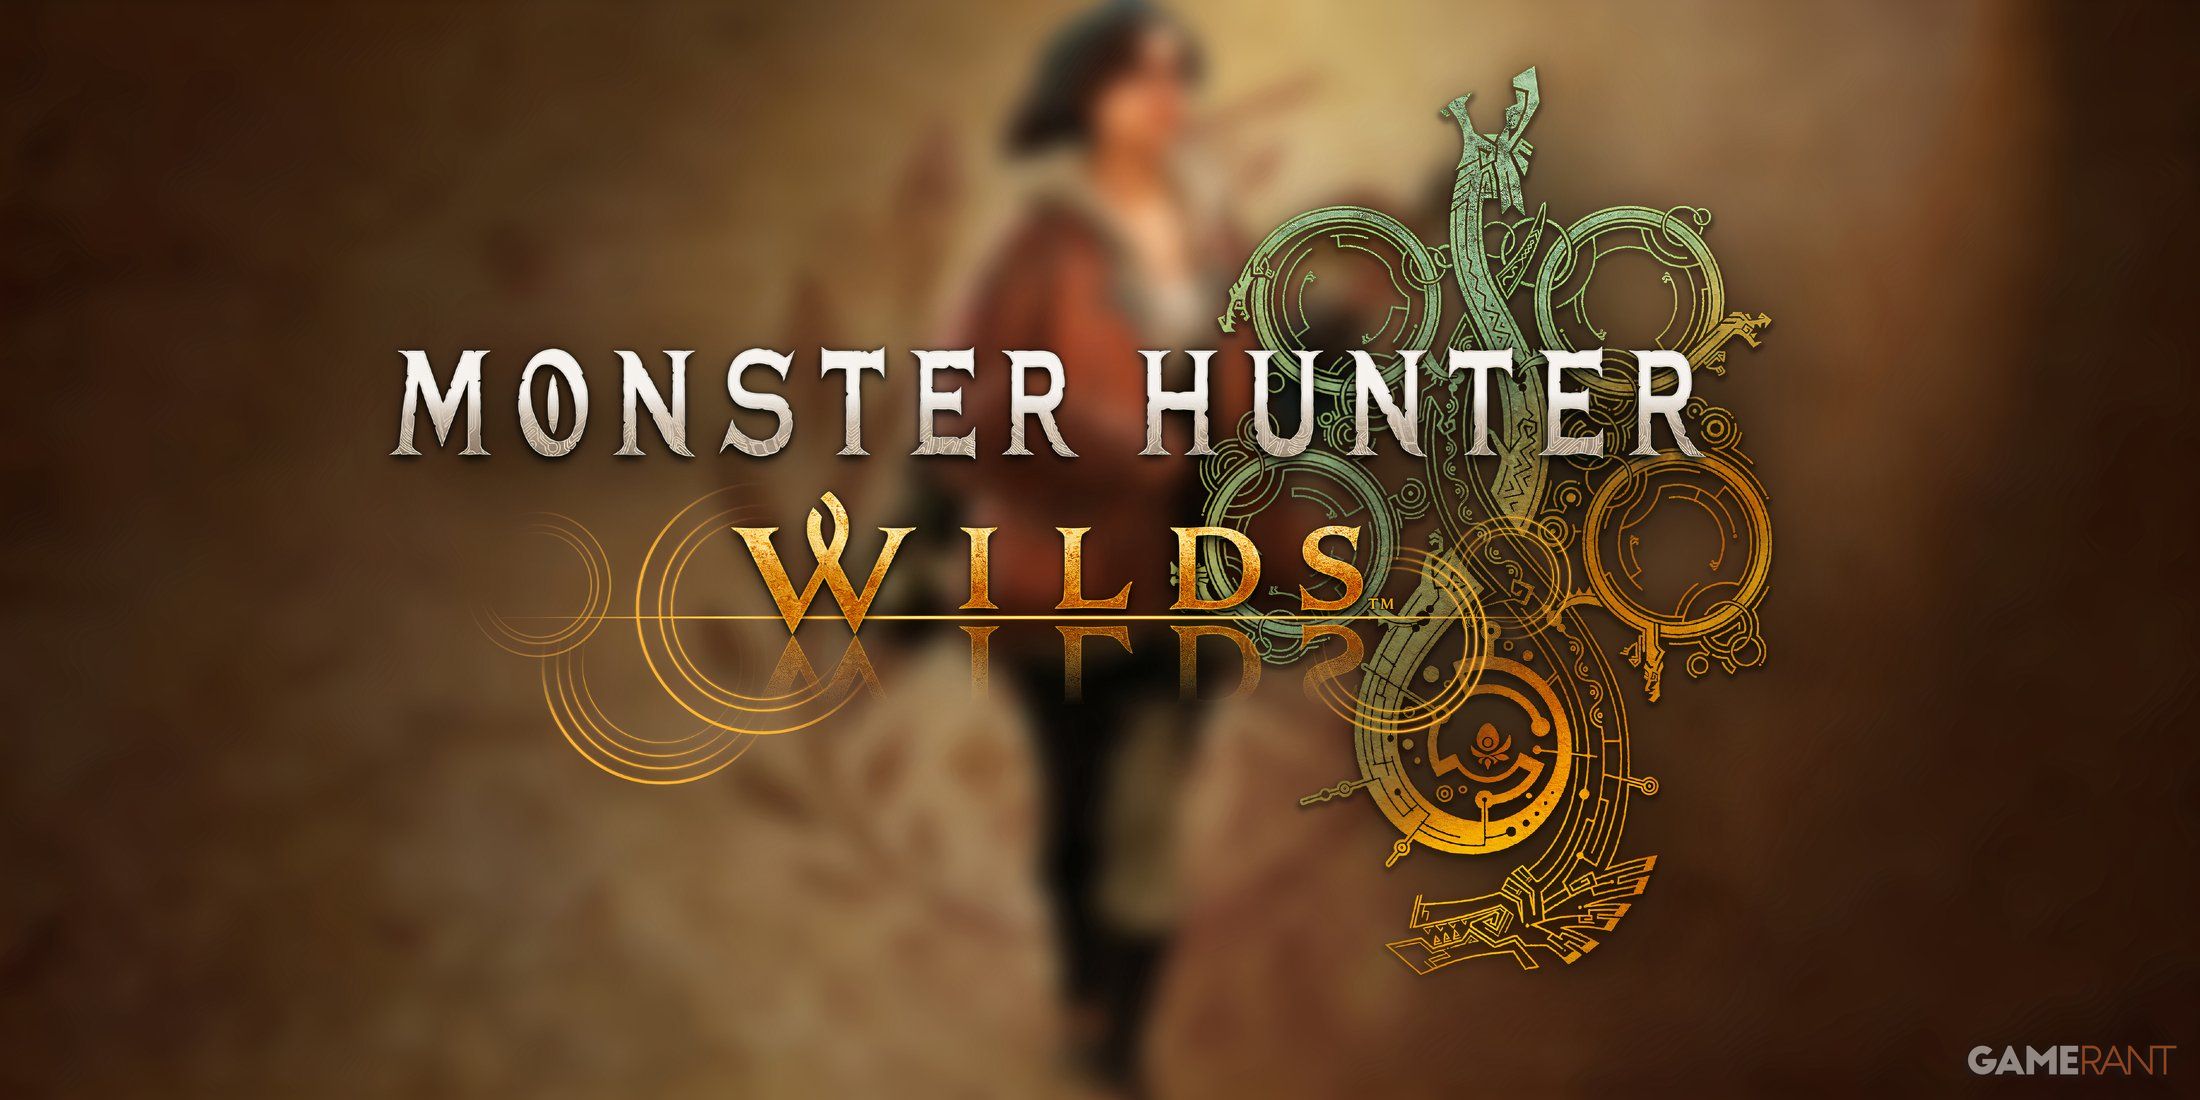 blurred alma artwork with monster hunter wilds logo